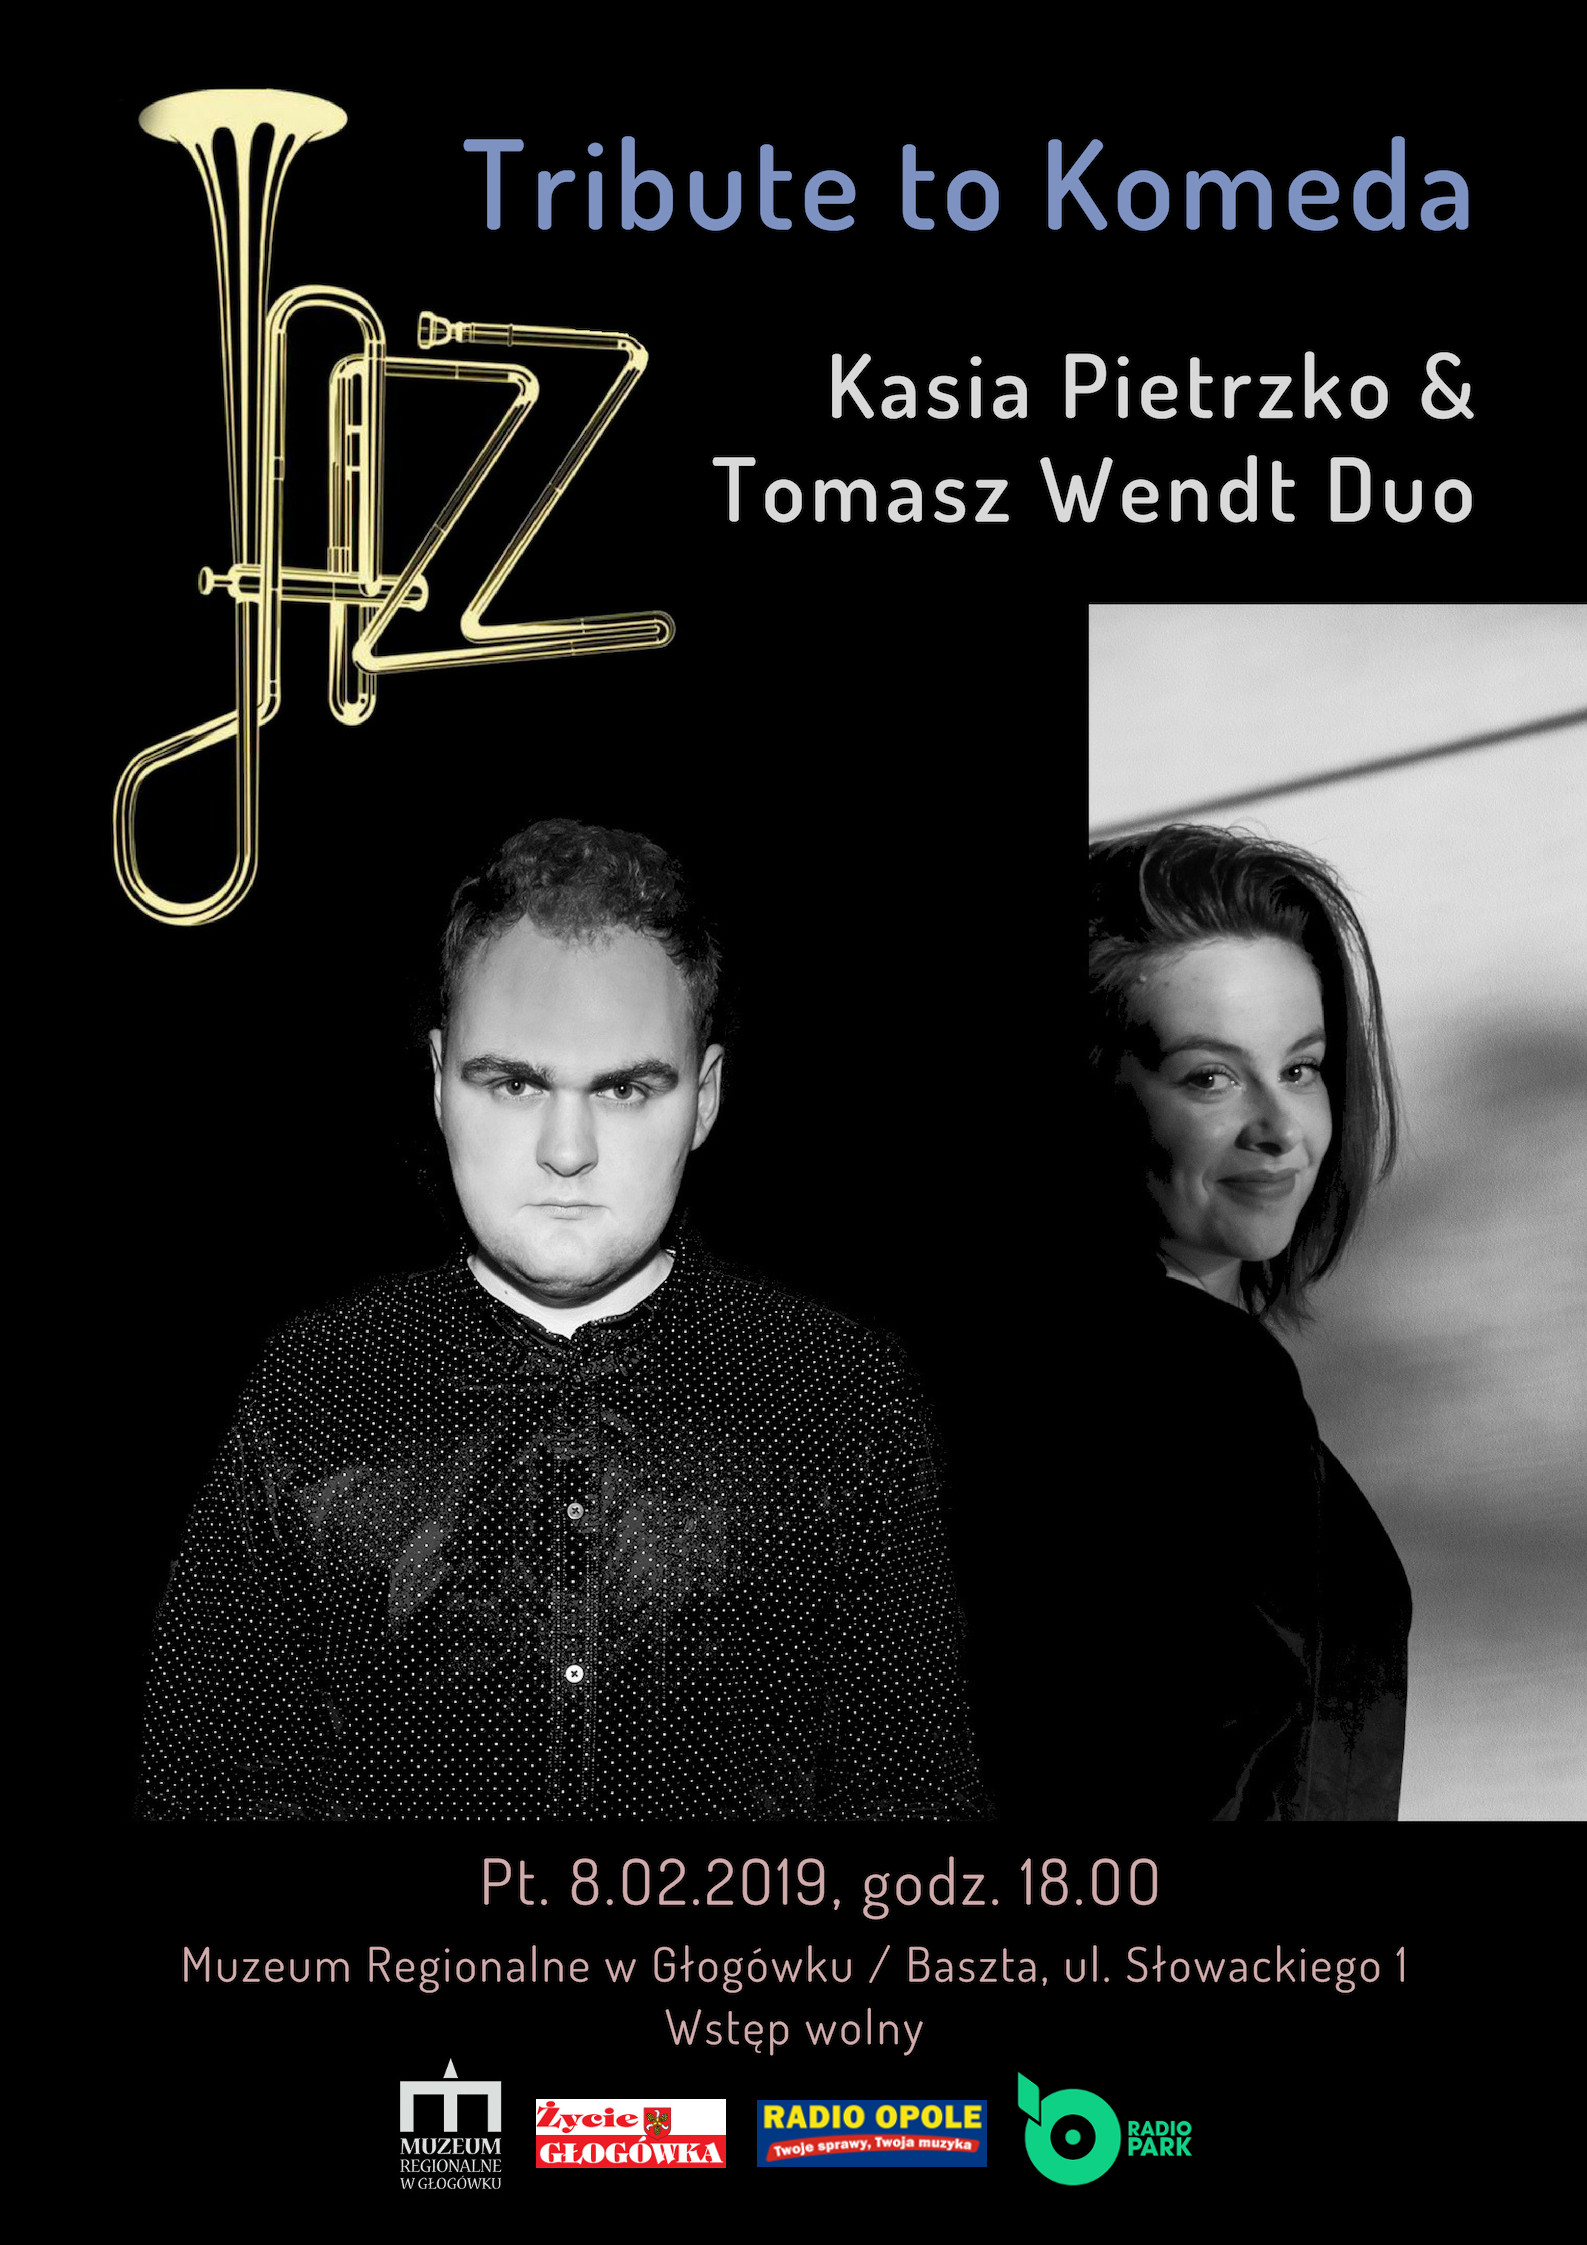 Kasia Pietrzko & Tomasz Wendt Duo, Tribute to  Komeda